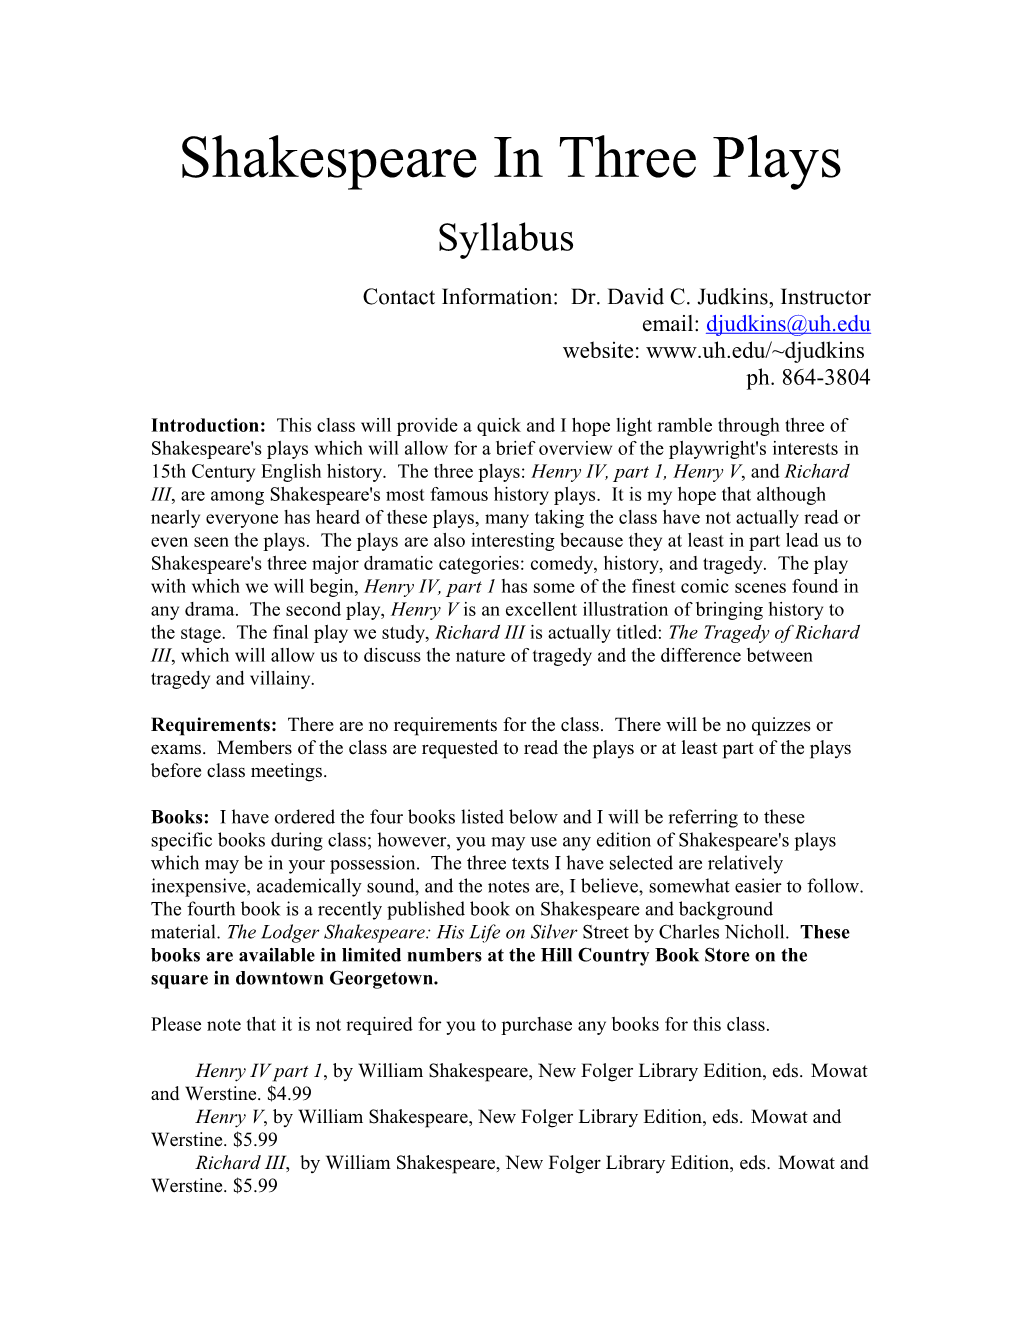 Shakespeare in Three Plays